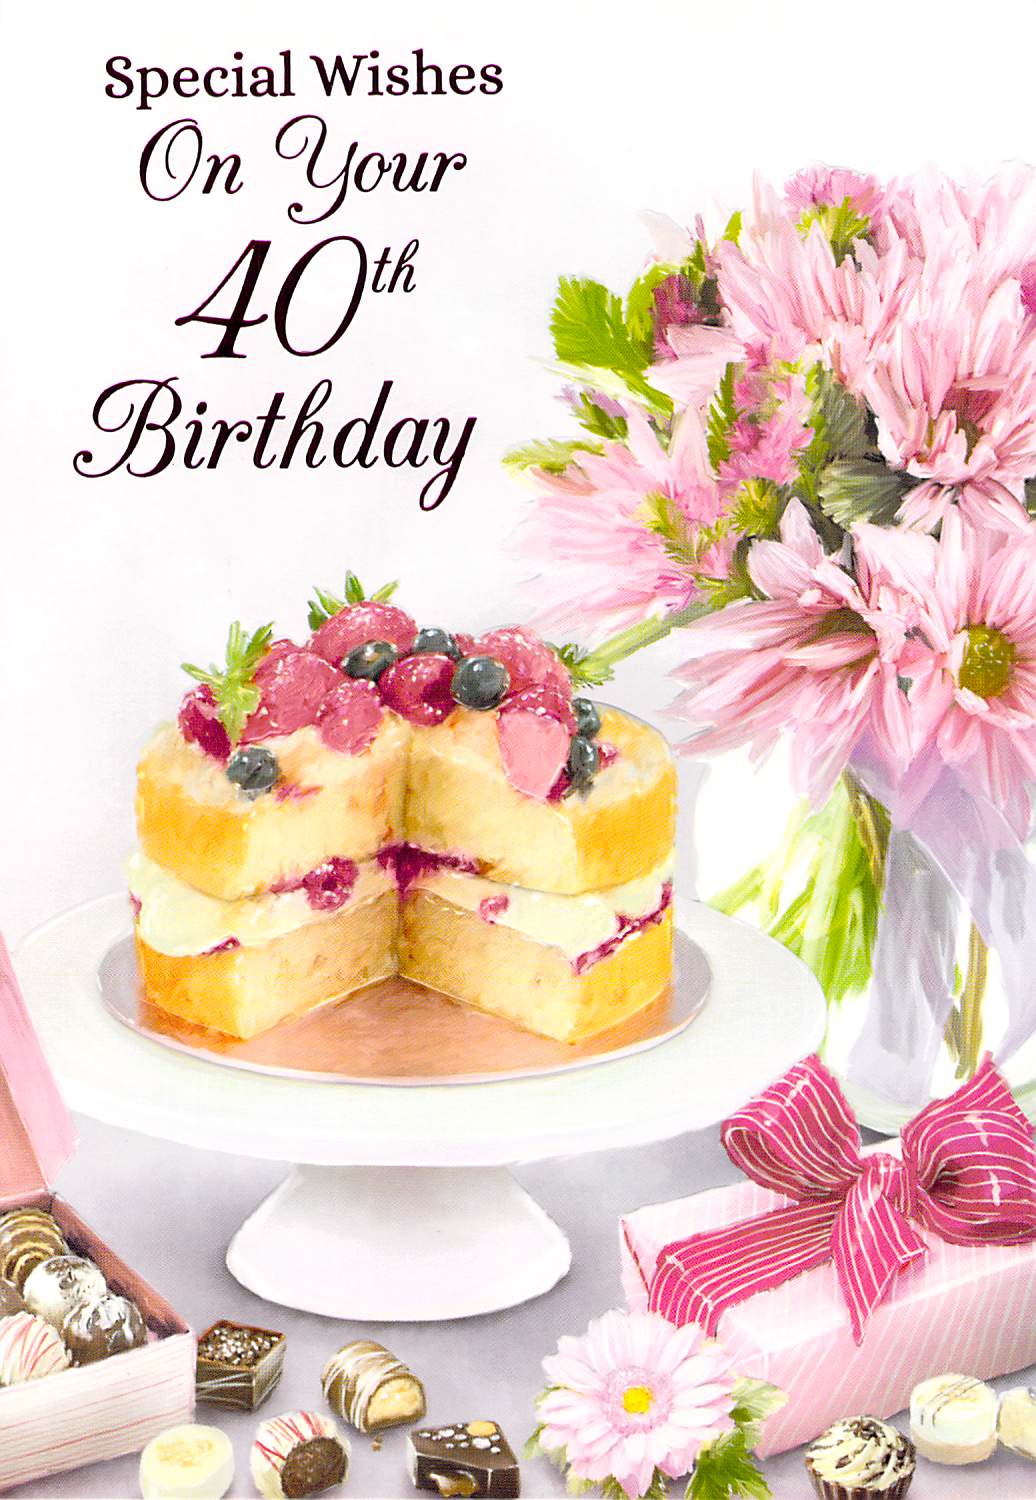 Age 40 - 40th Birthday - Greeting Card - Cake / Flowers